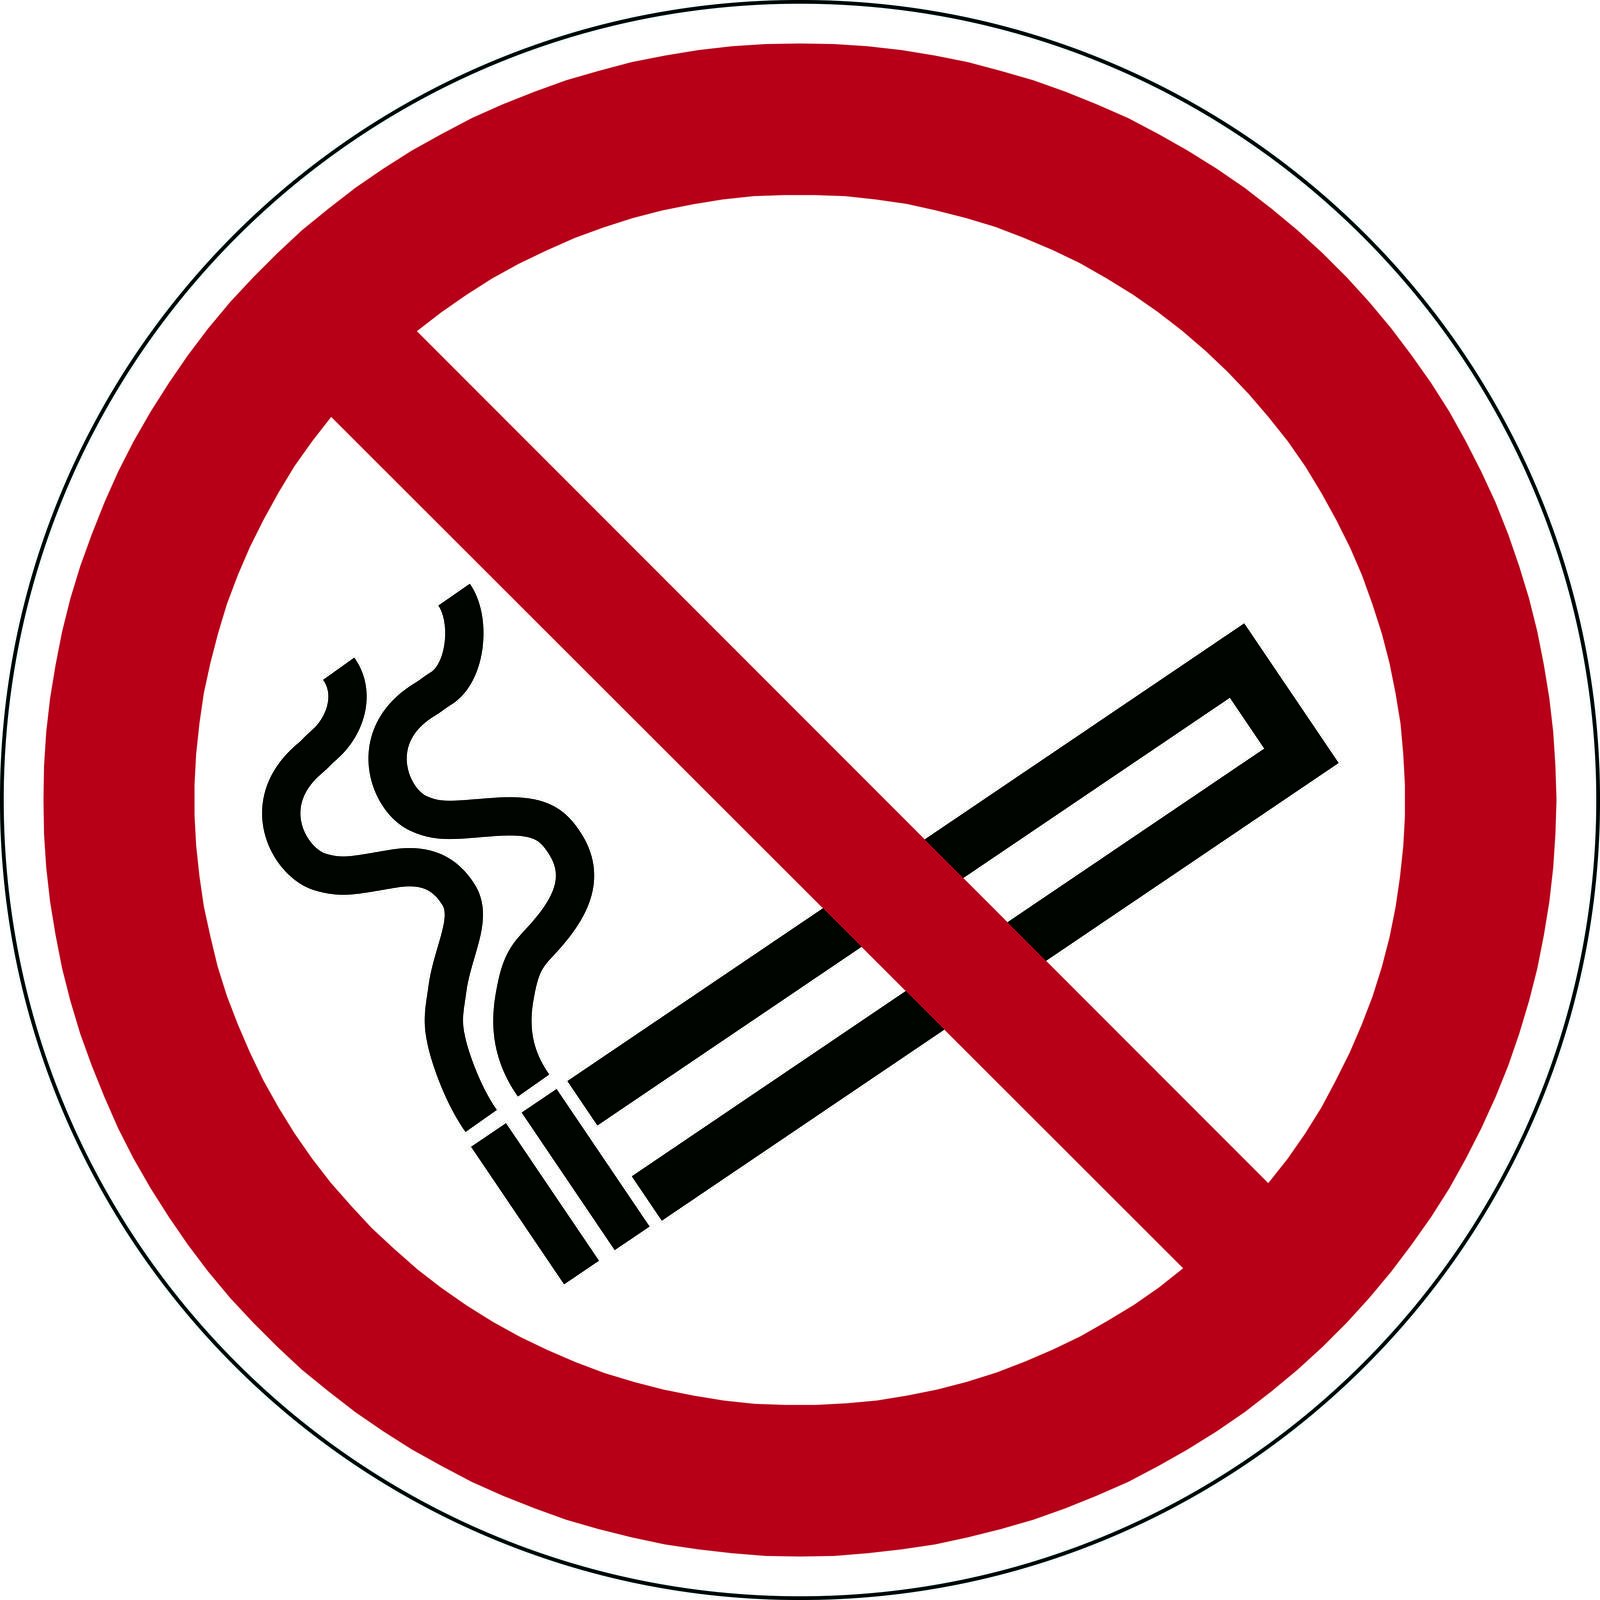 Durable forbudsskilt rygning forbudt